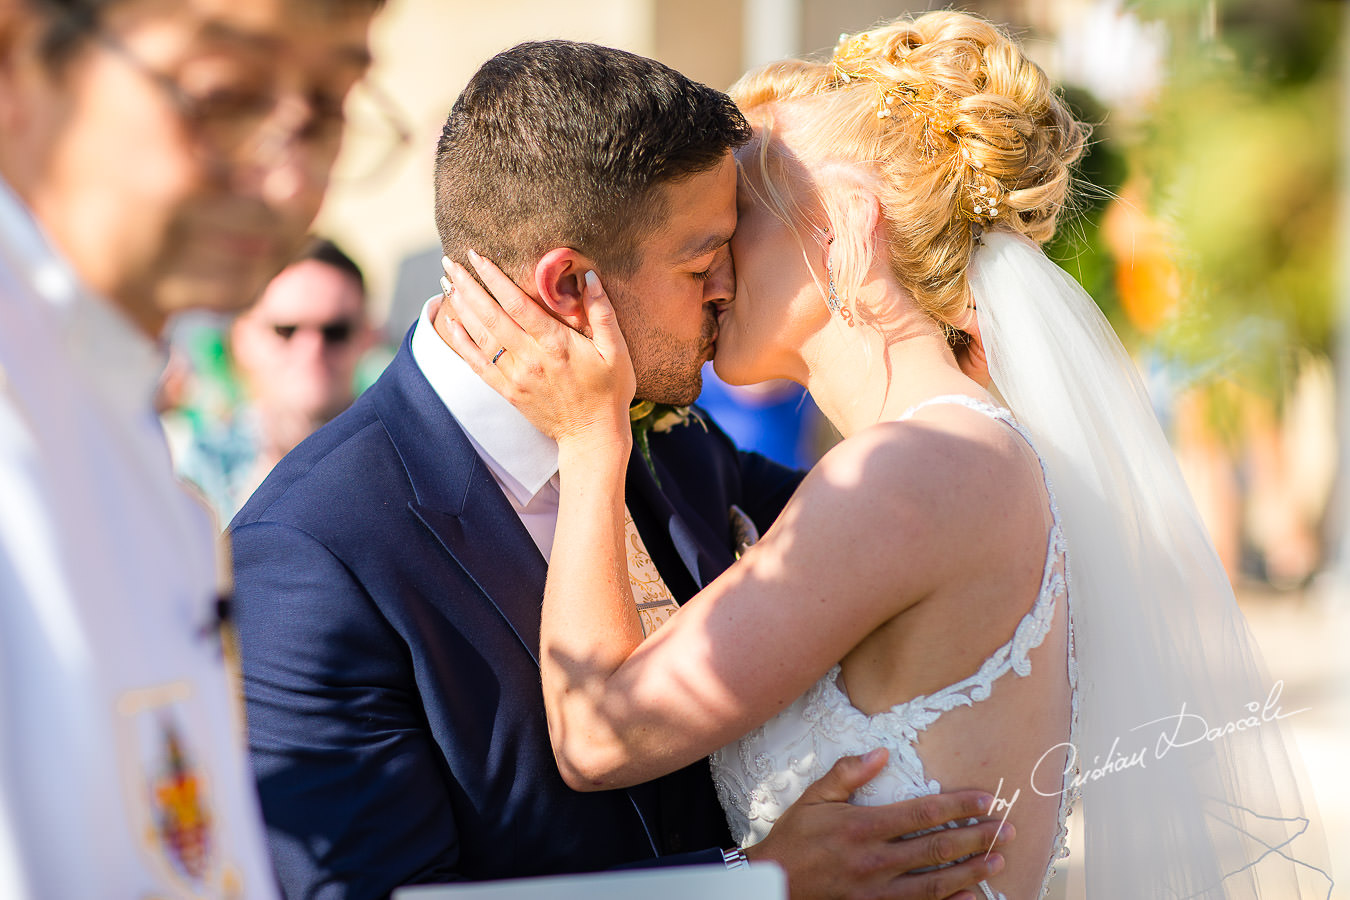 Stylish Wedding Photography at Elea Estate. Moments captured by Cyprus Wedding Photographer Cristian Dascalu